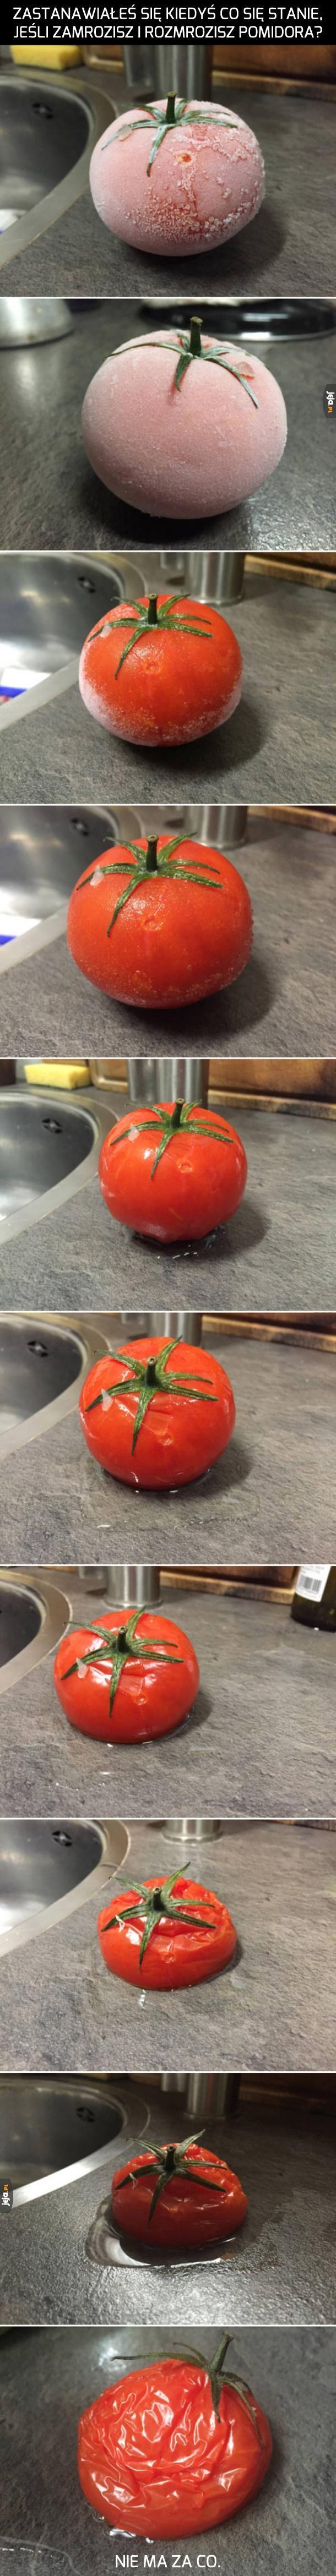 Mrożony pomidor